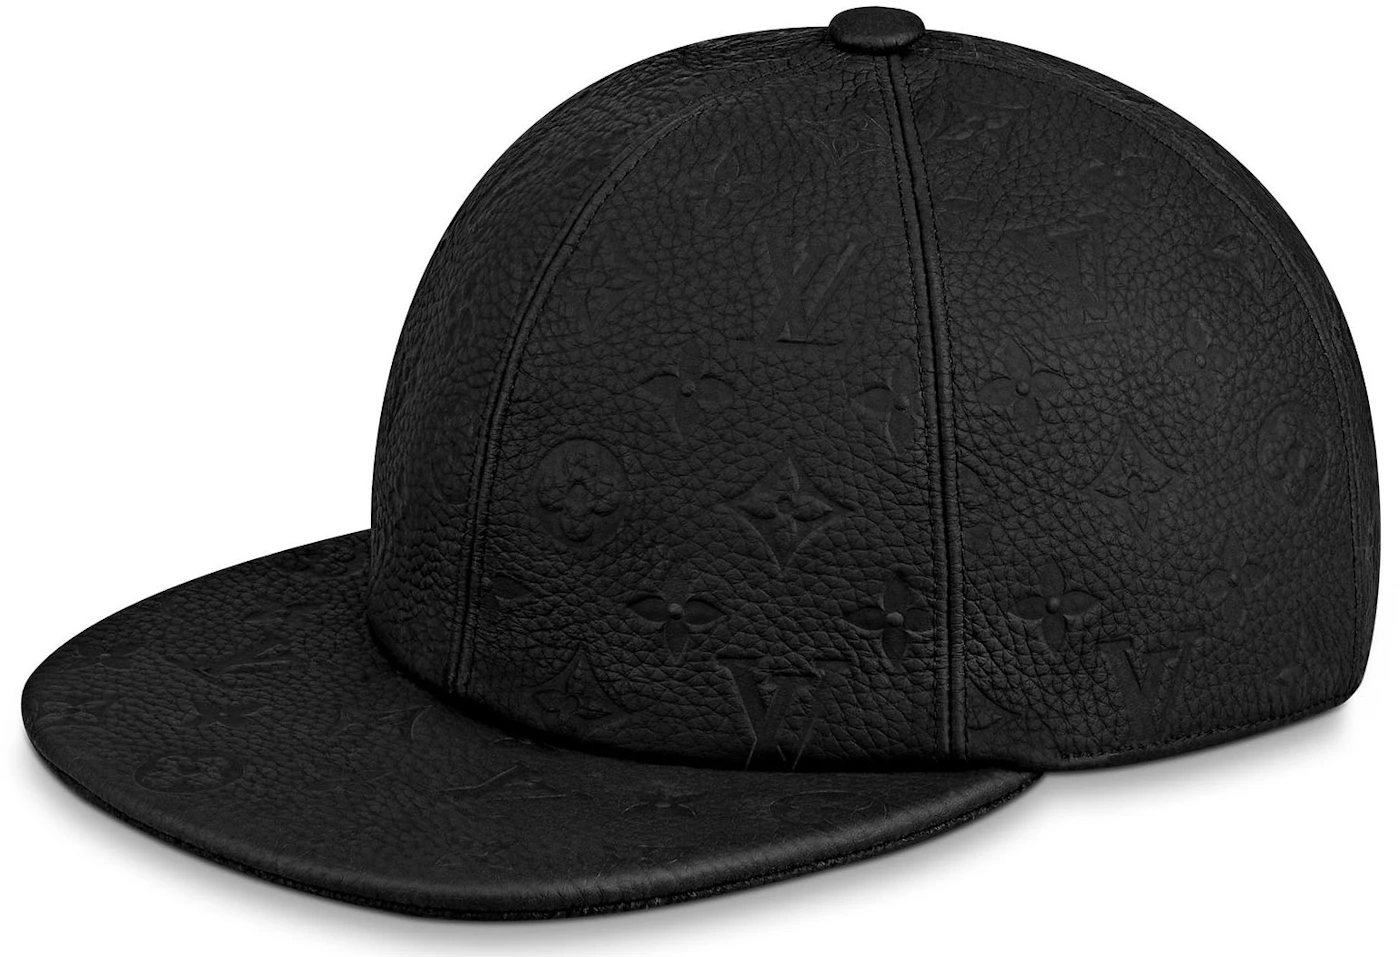 LOUIS VUITTON Monogram Beanie Hat Cap LV Logo Black & Gray